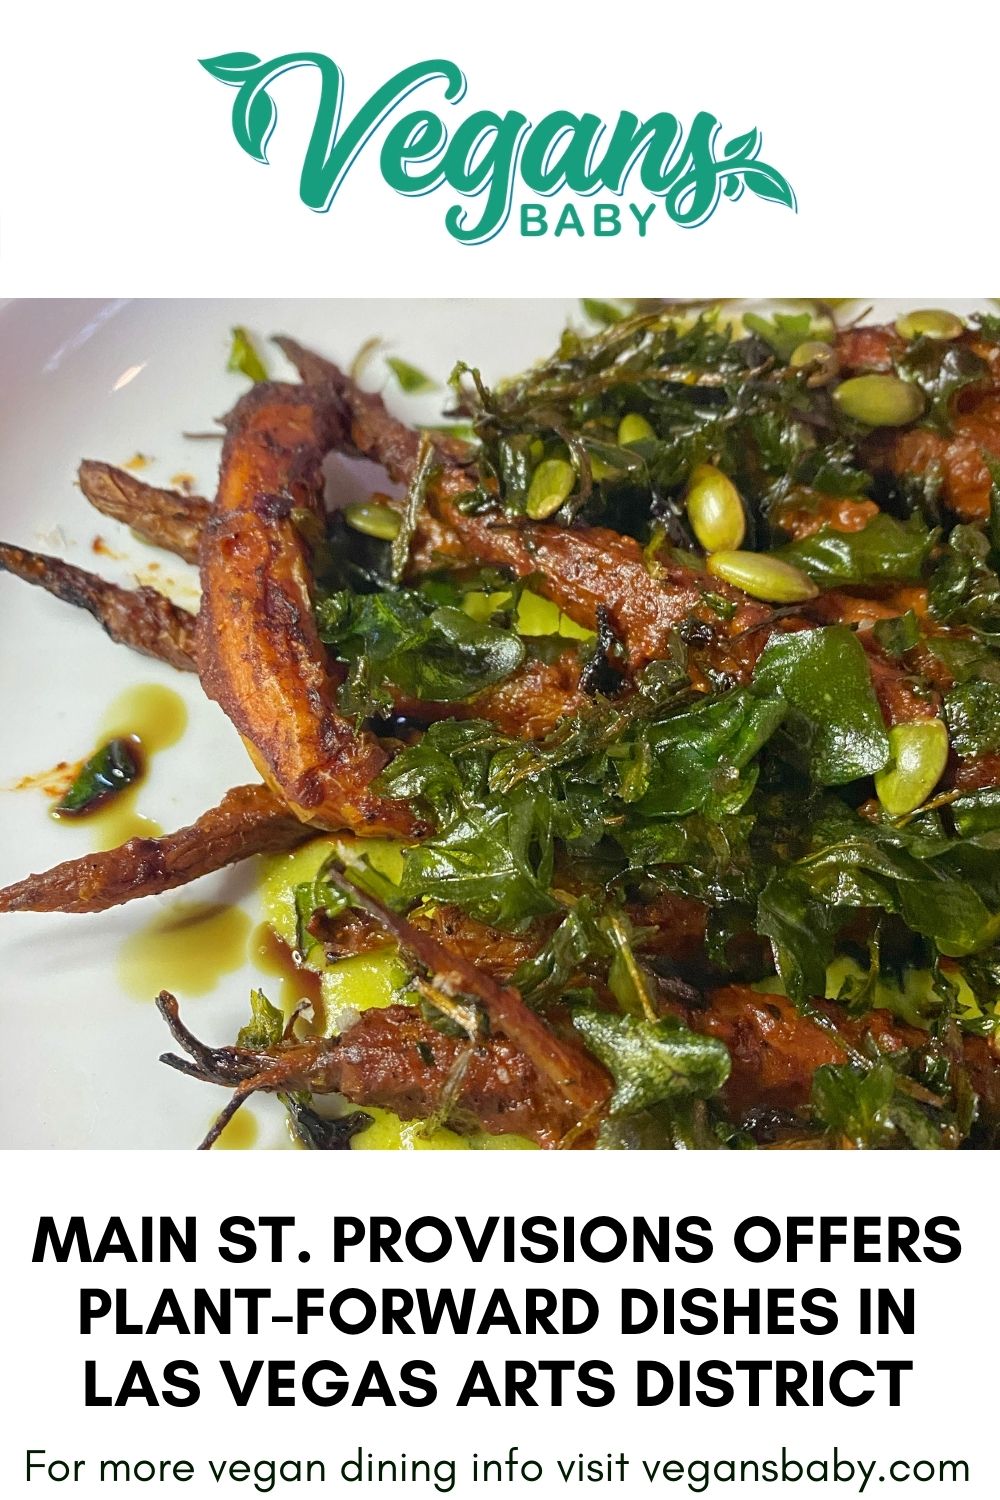 Main St Provisions is a vegan-friendly restaurant in Las Vegas. For more vegan dining options in Las Vegas visit www.vegansbaby.com